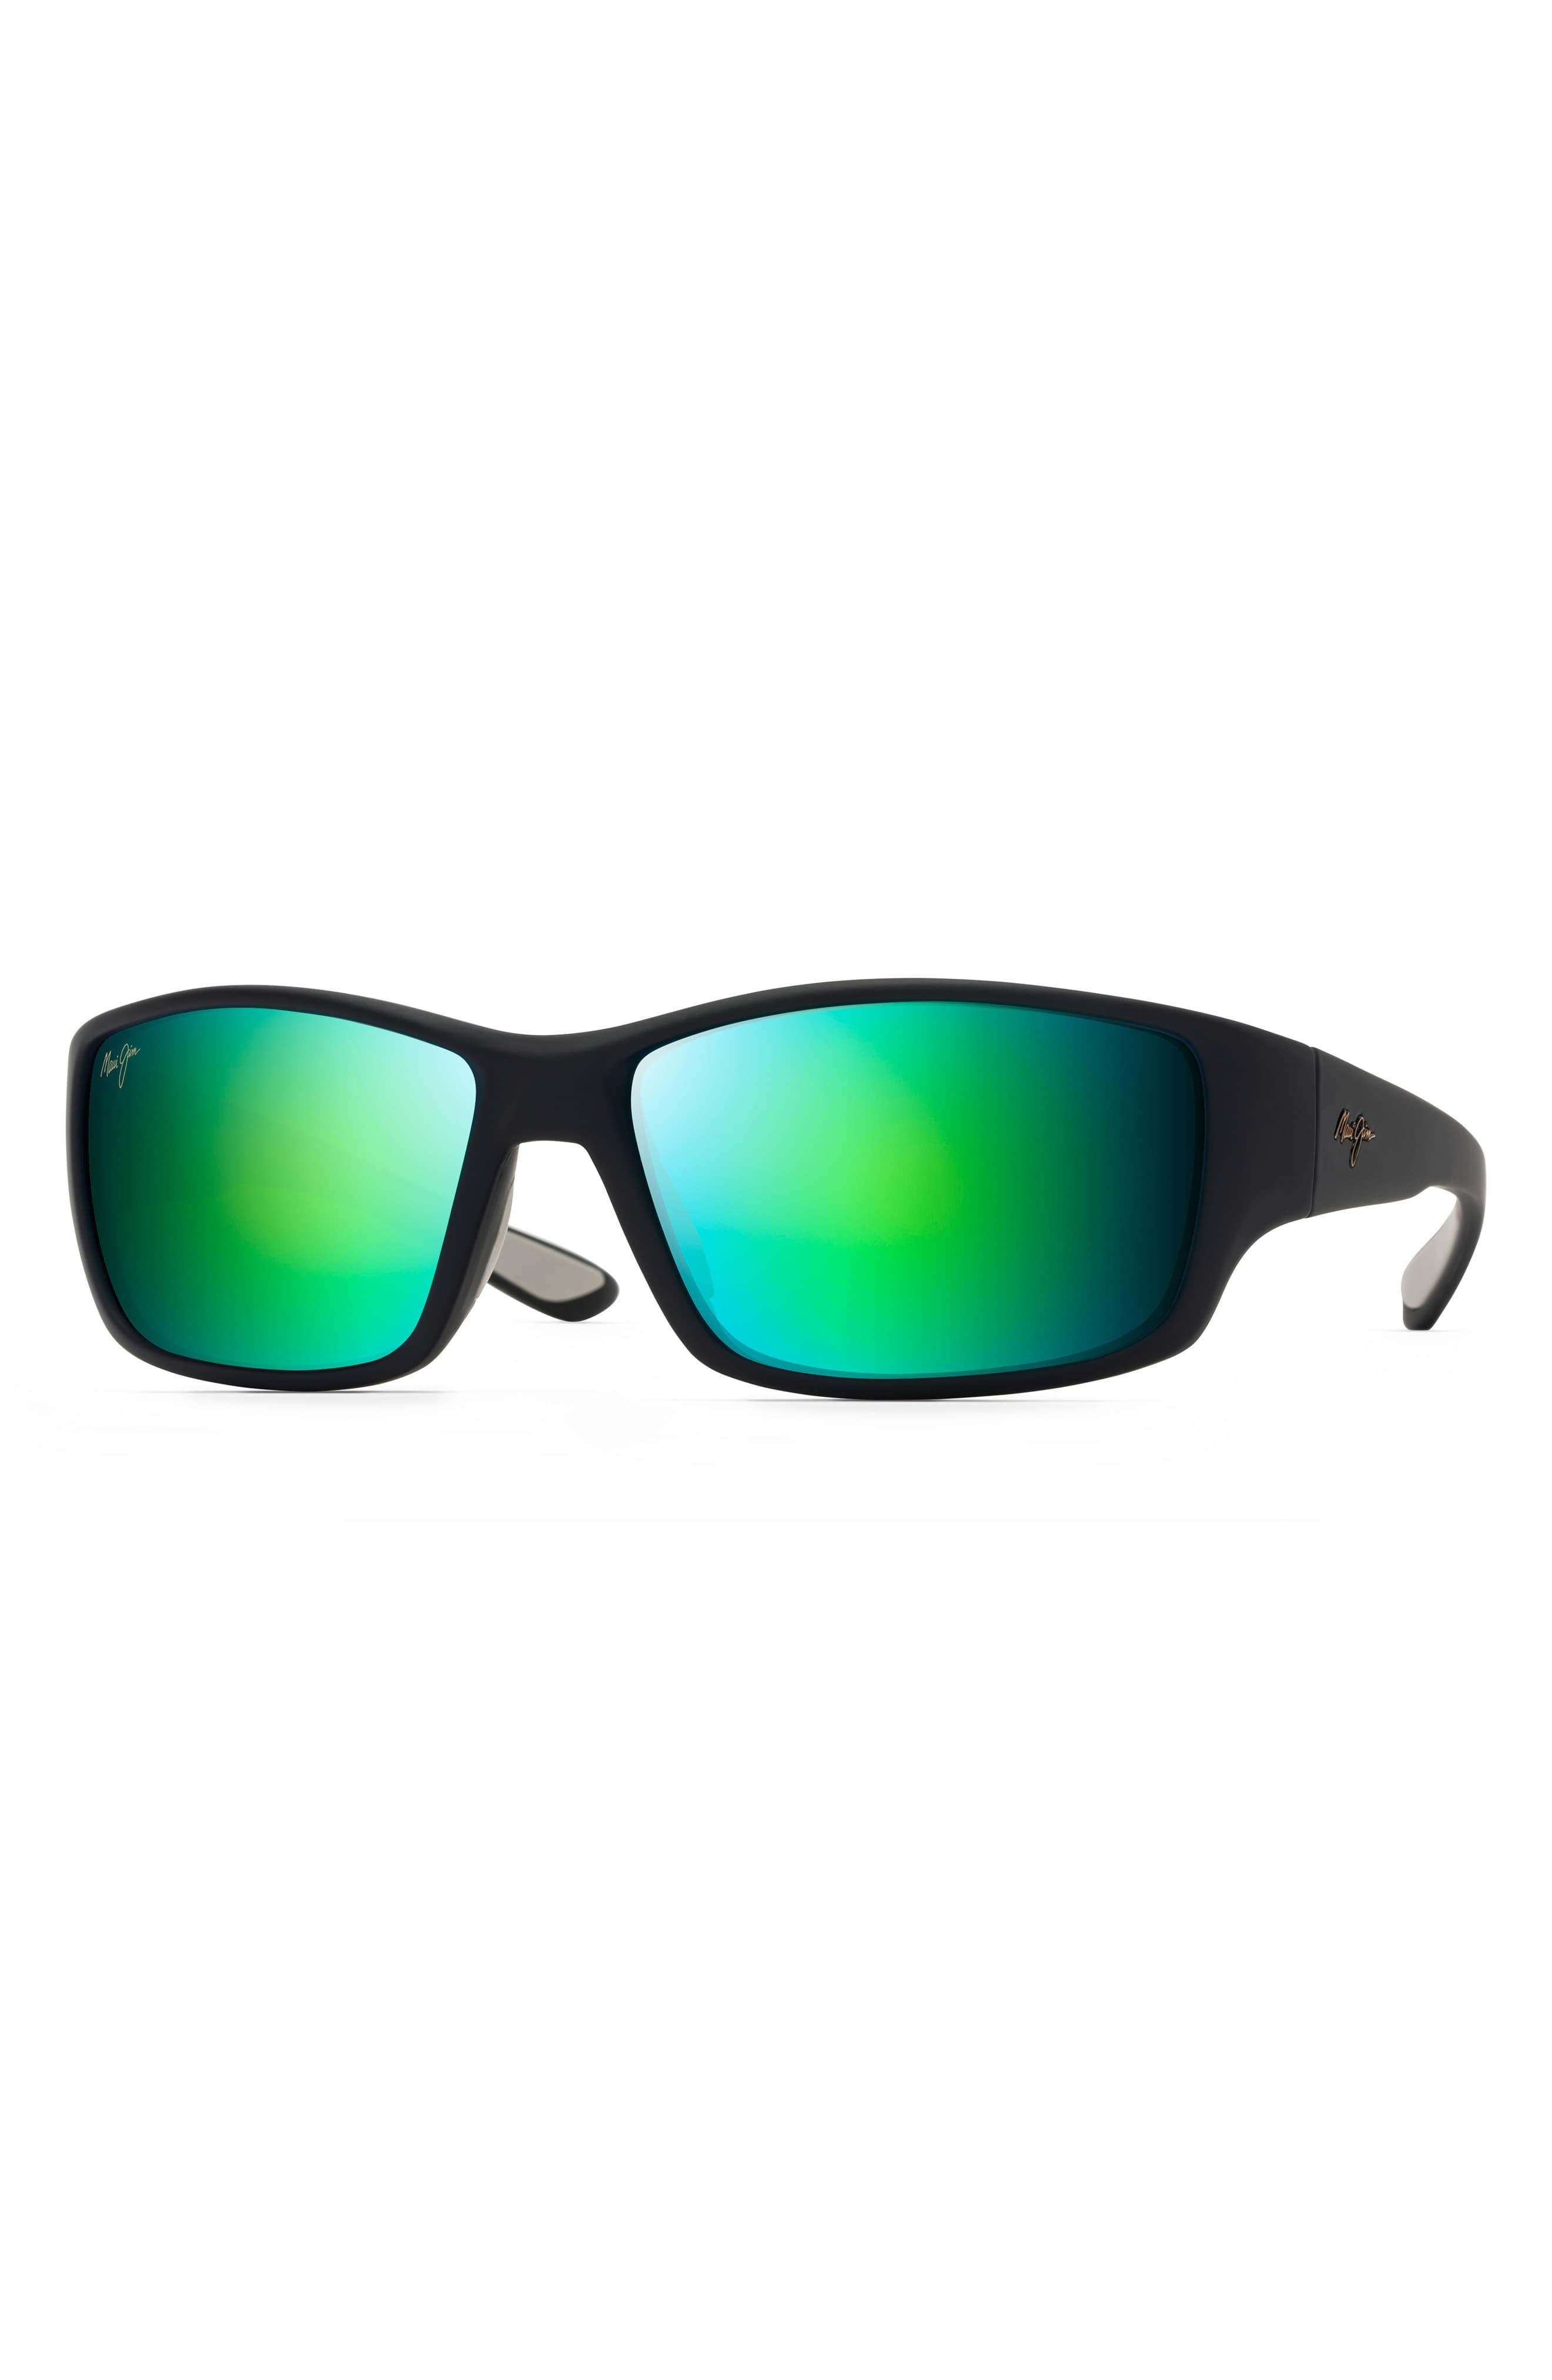 https://cdn.lookastic.com/green-sunglasses/local-kine-61mm-polarized-wraparound-sunglasses-original-9987174.jpg